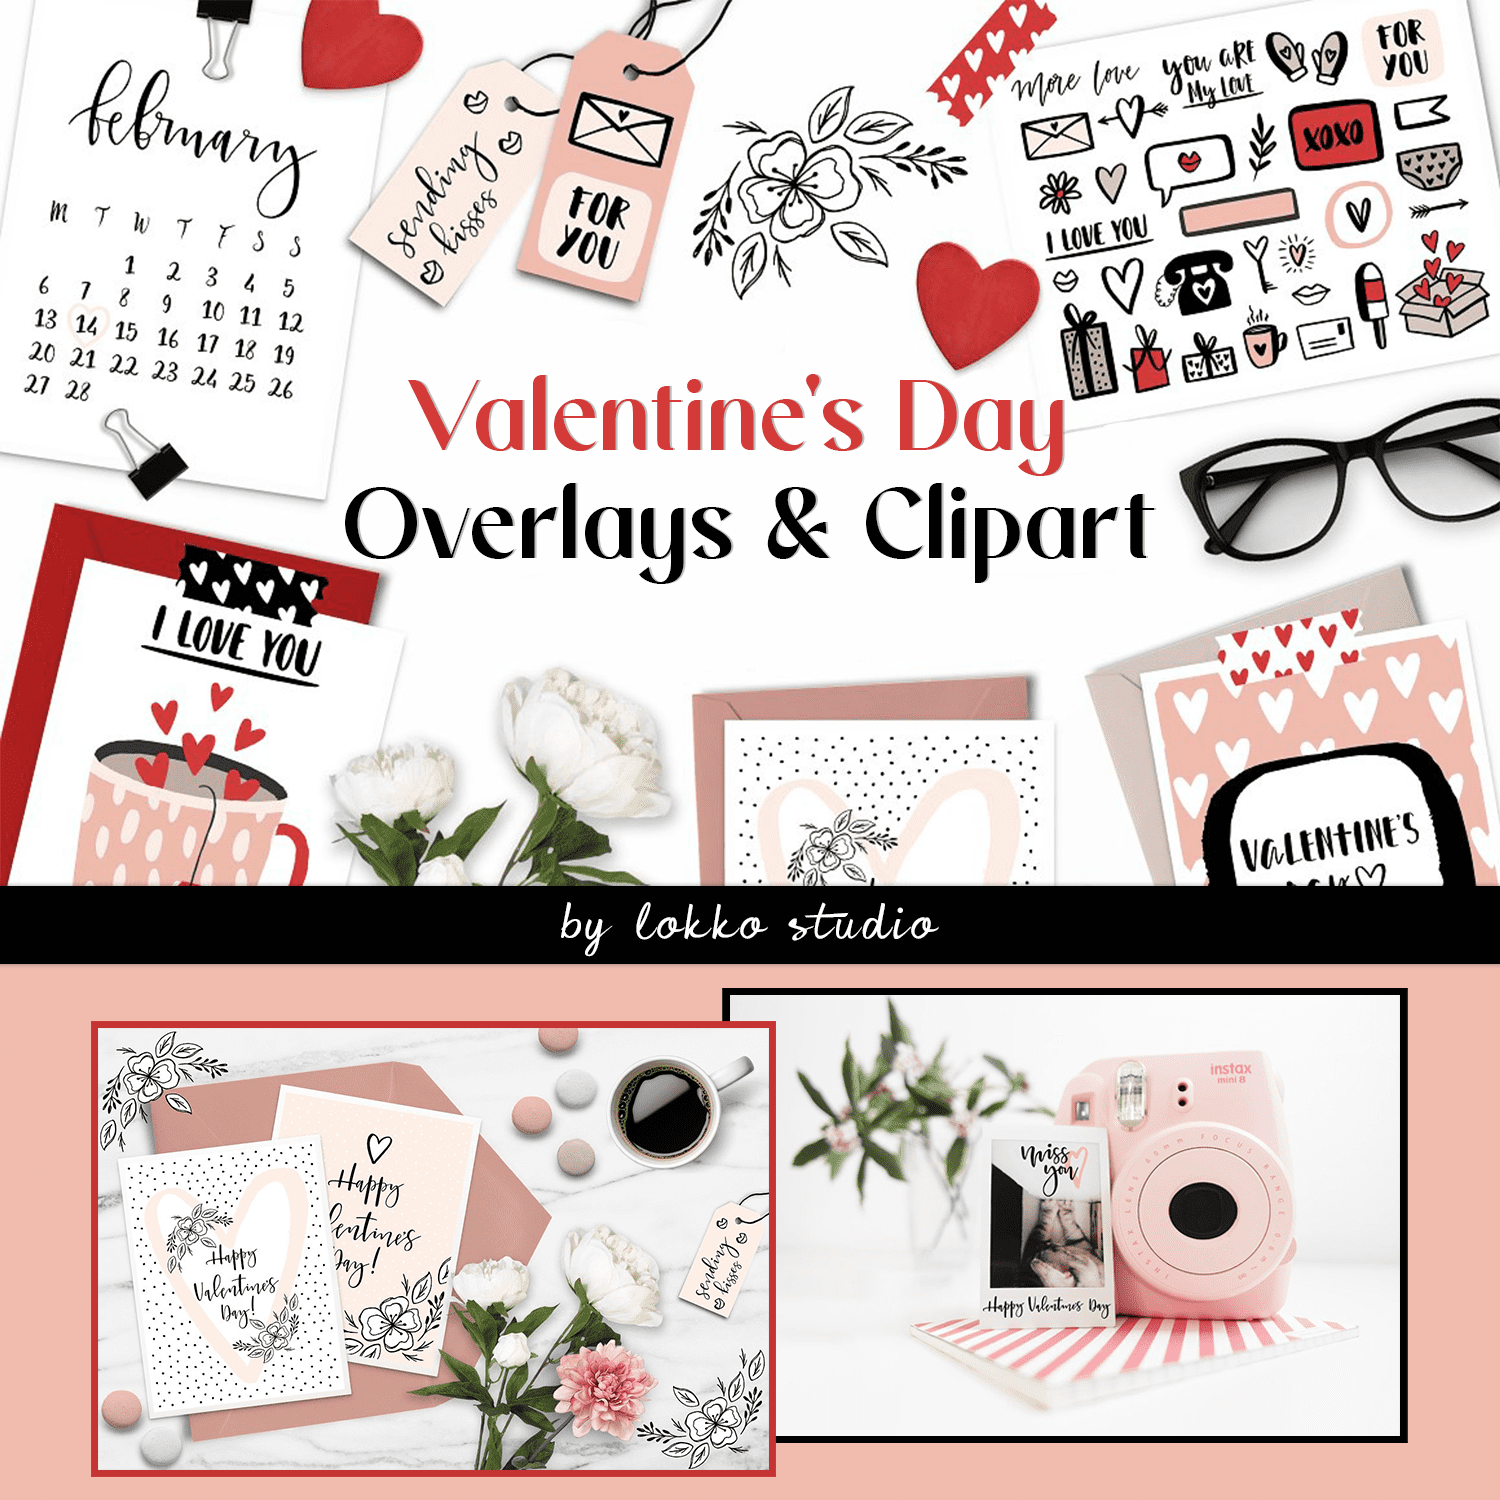 Valentine's Day Overlays & Clipart.